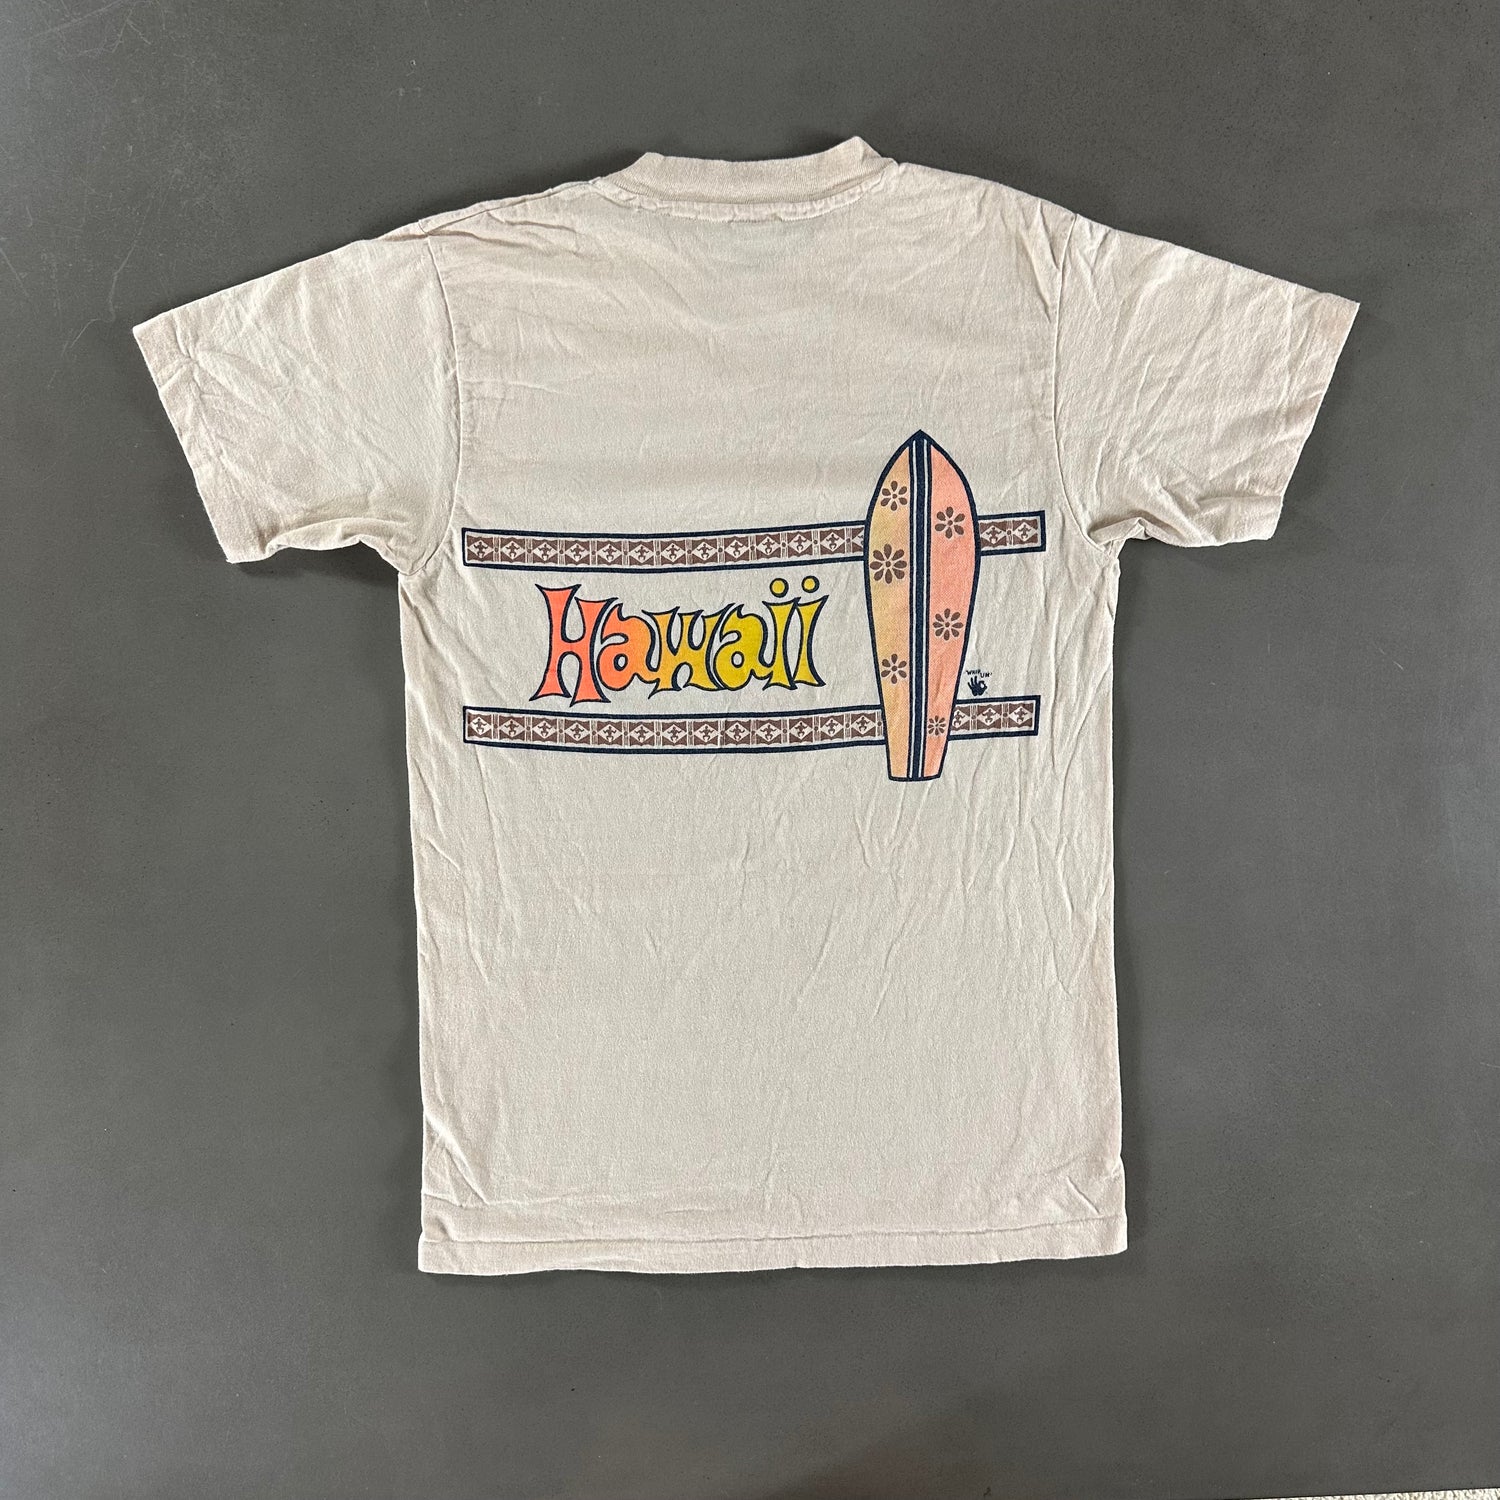 Vintage 1970s Hawaii T-shirt size Medium